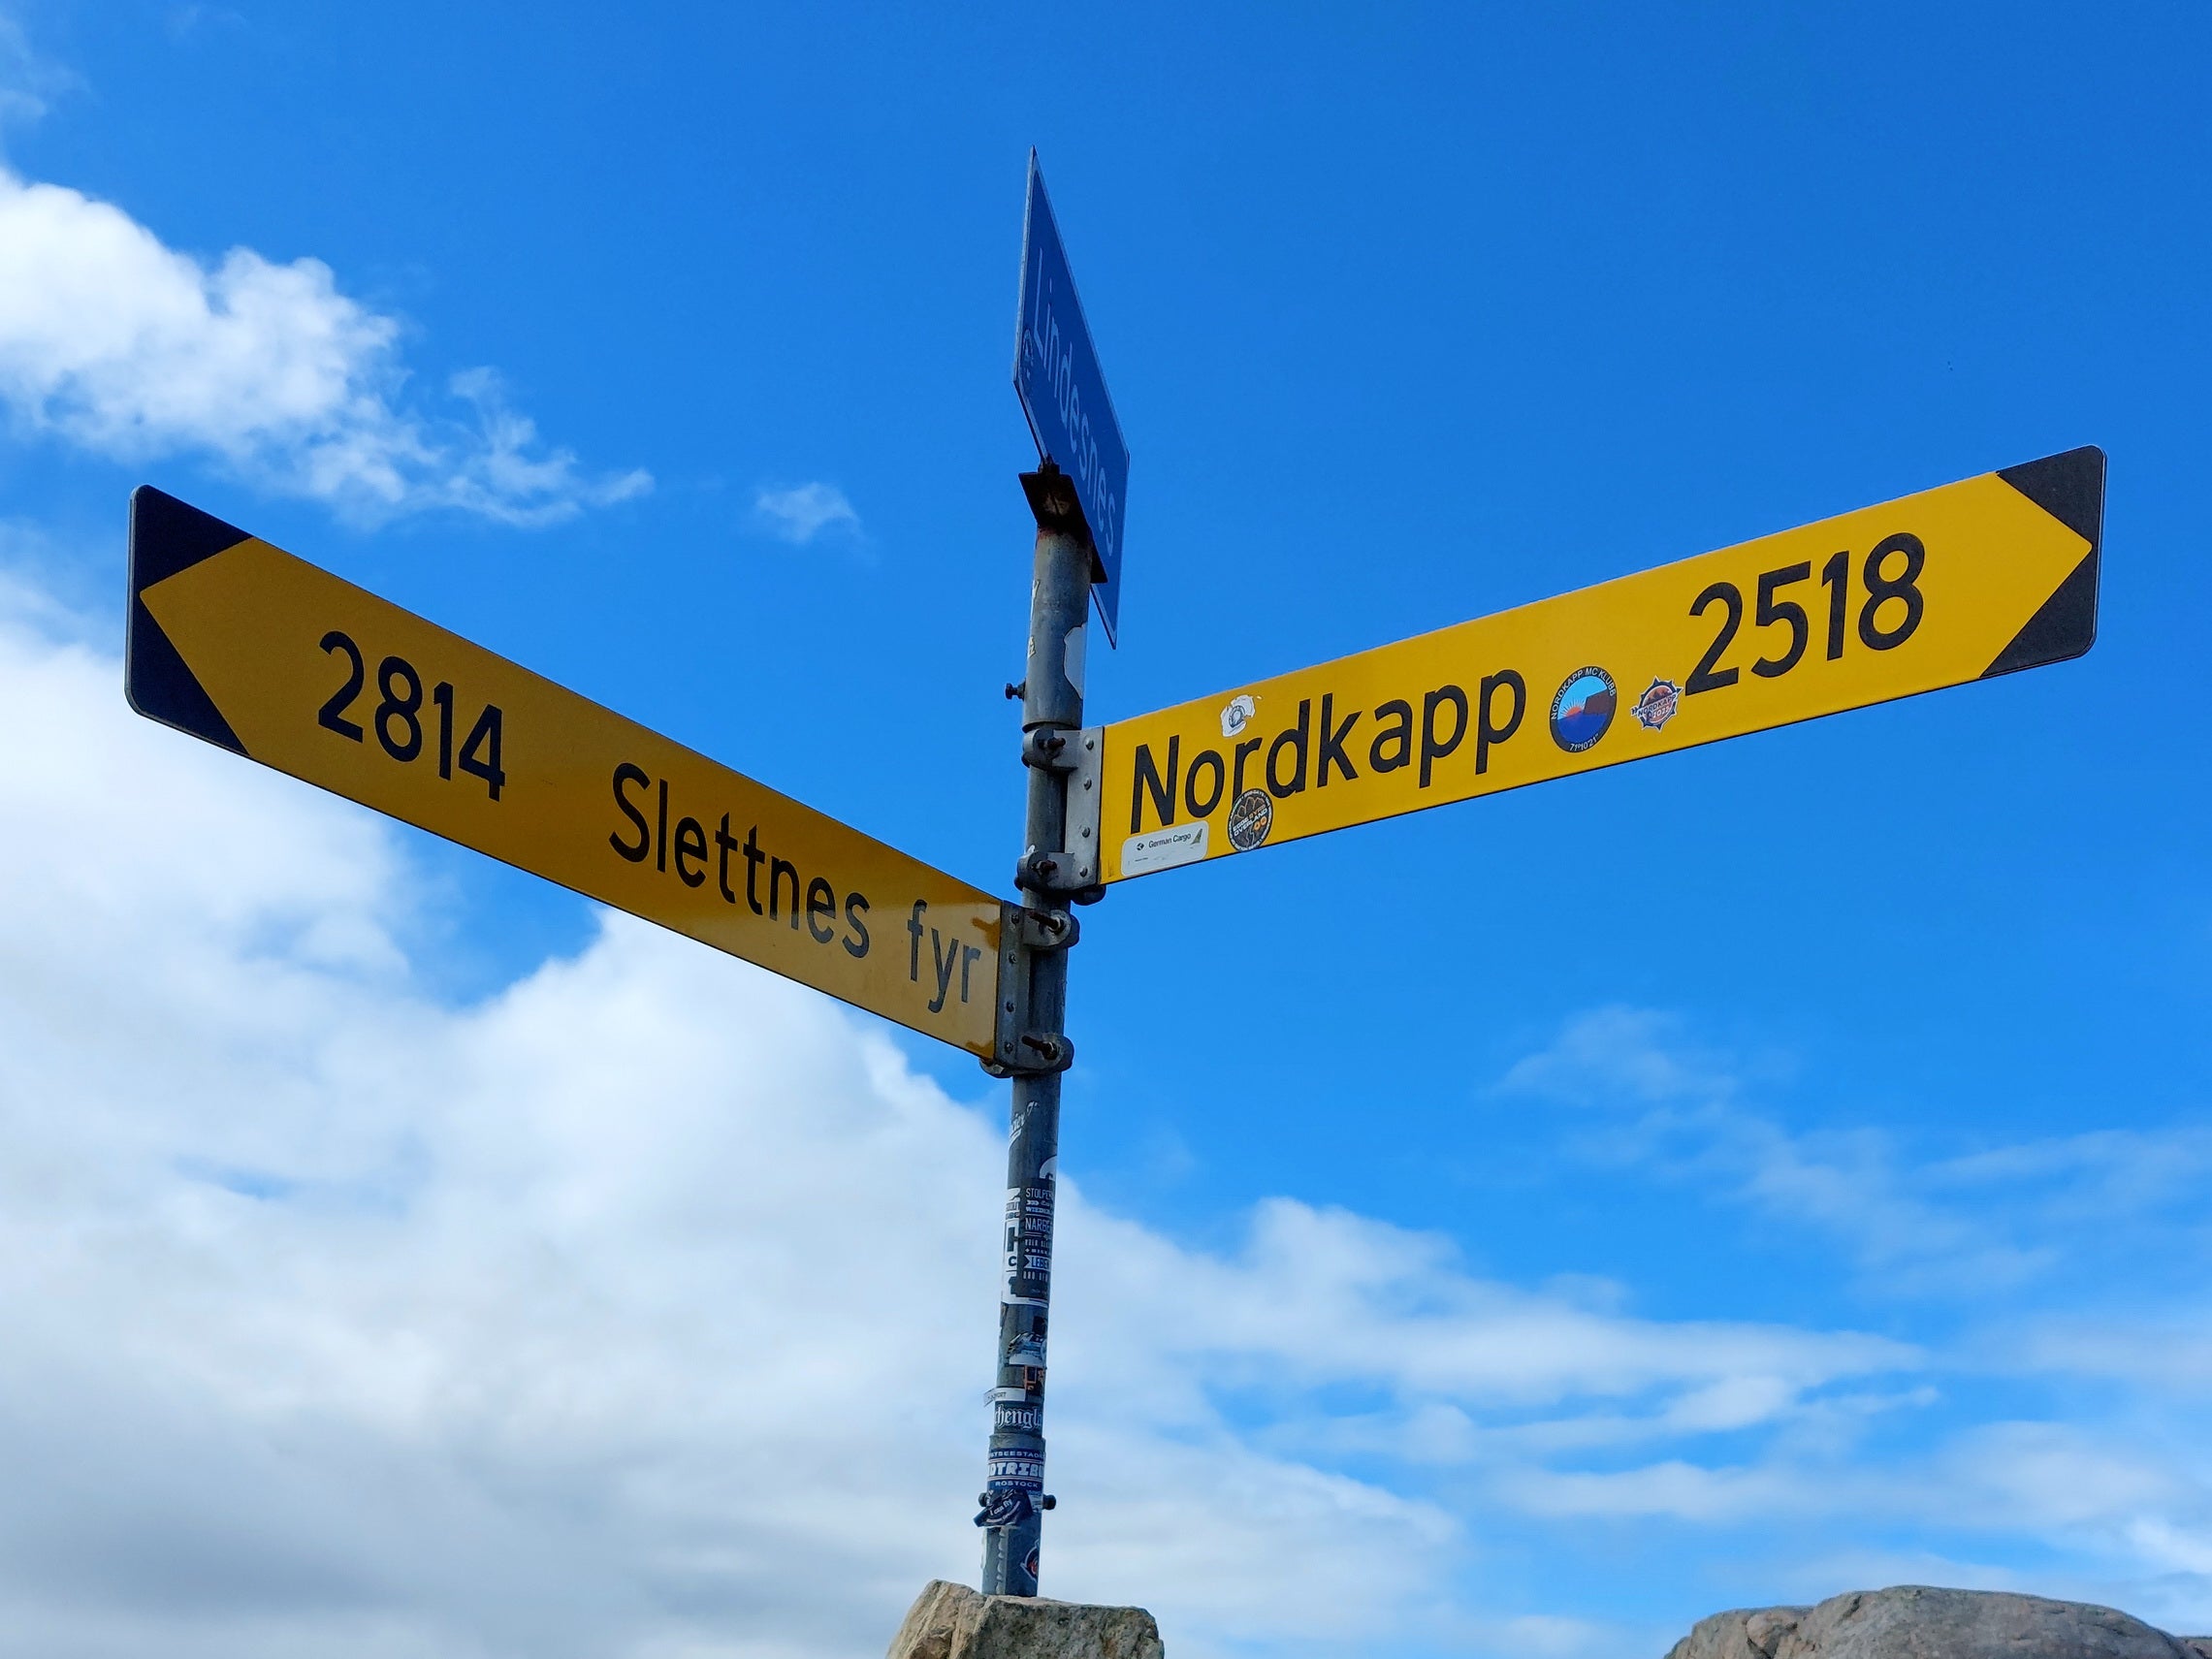 Tourenplanung deiner Motorradreise ans Nordkap